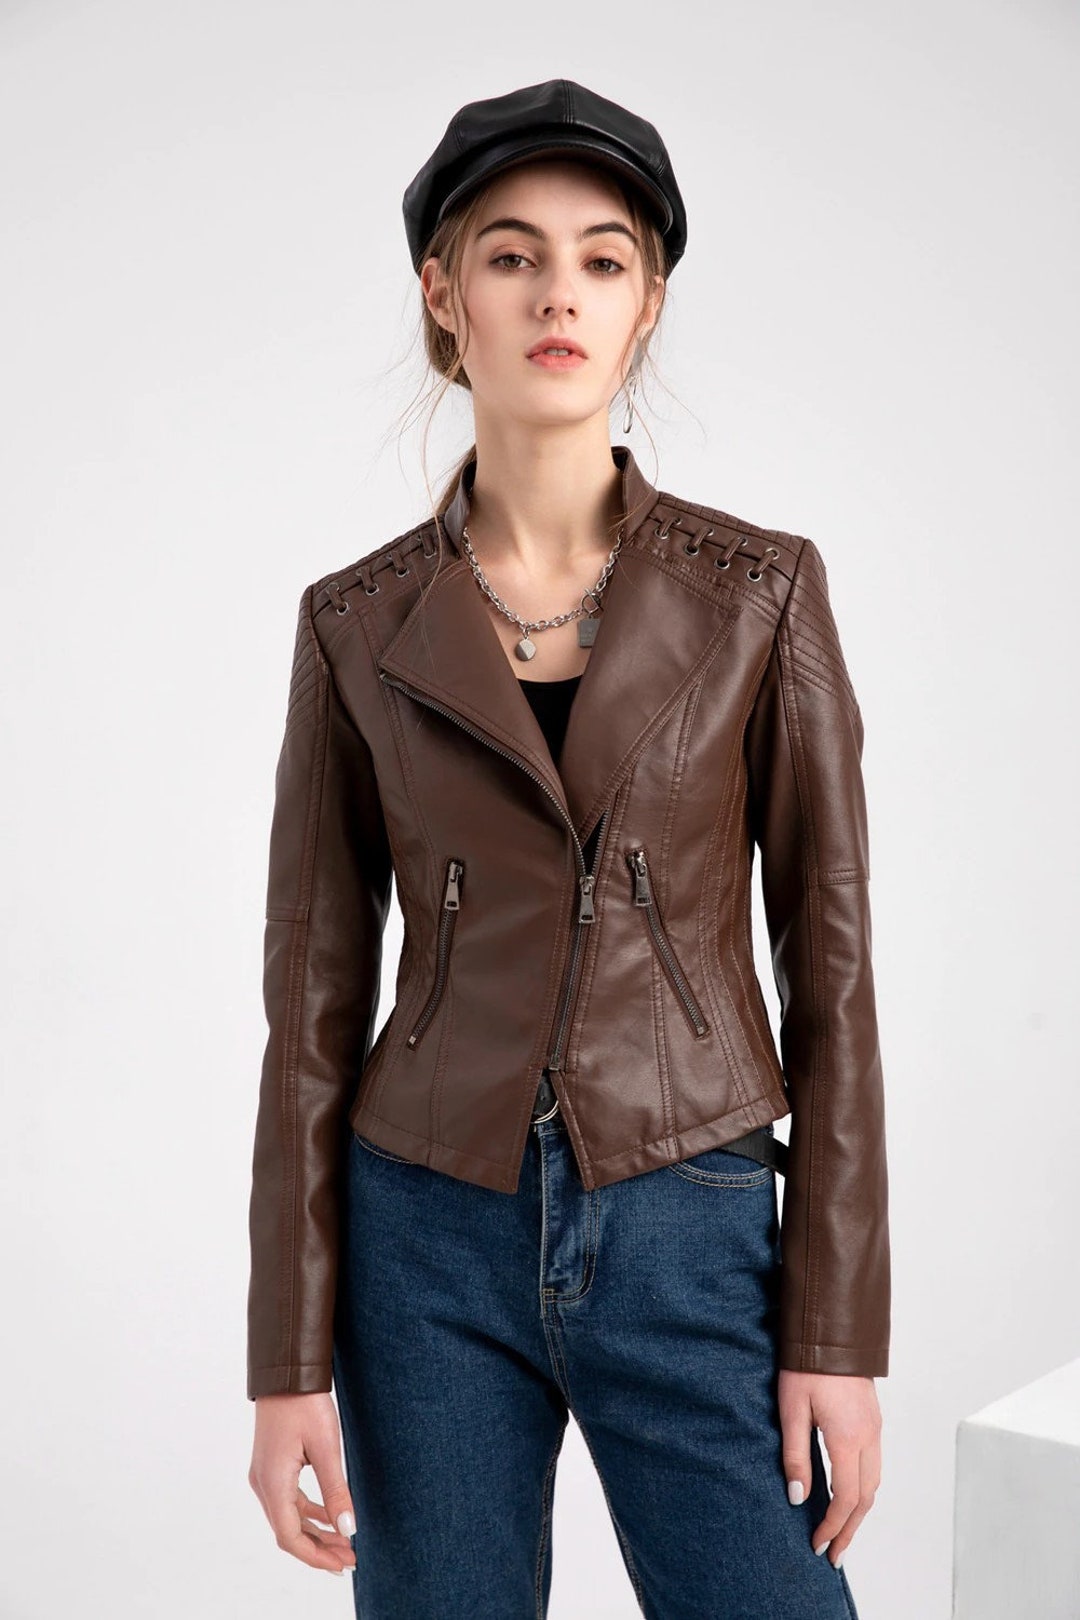 Stylish Lambskin Leather Jacket for Women's Biker Jacket Brown Leather ...